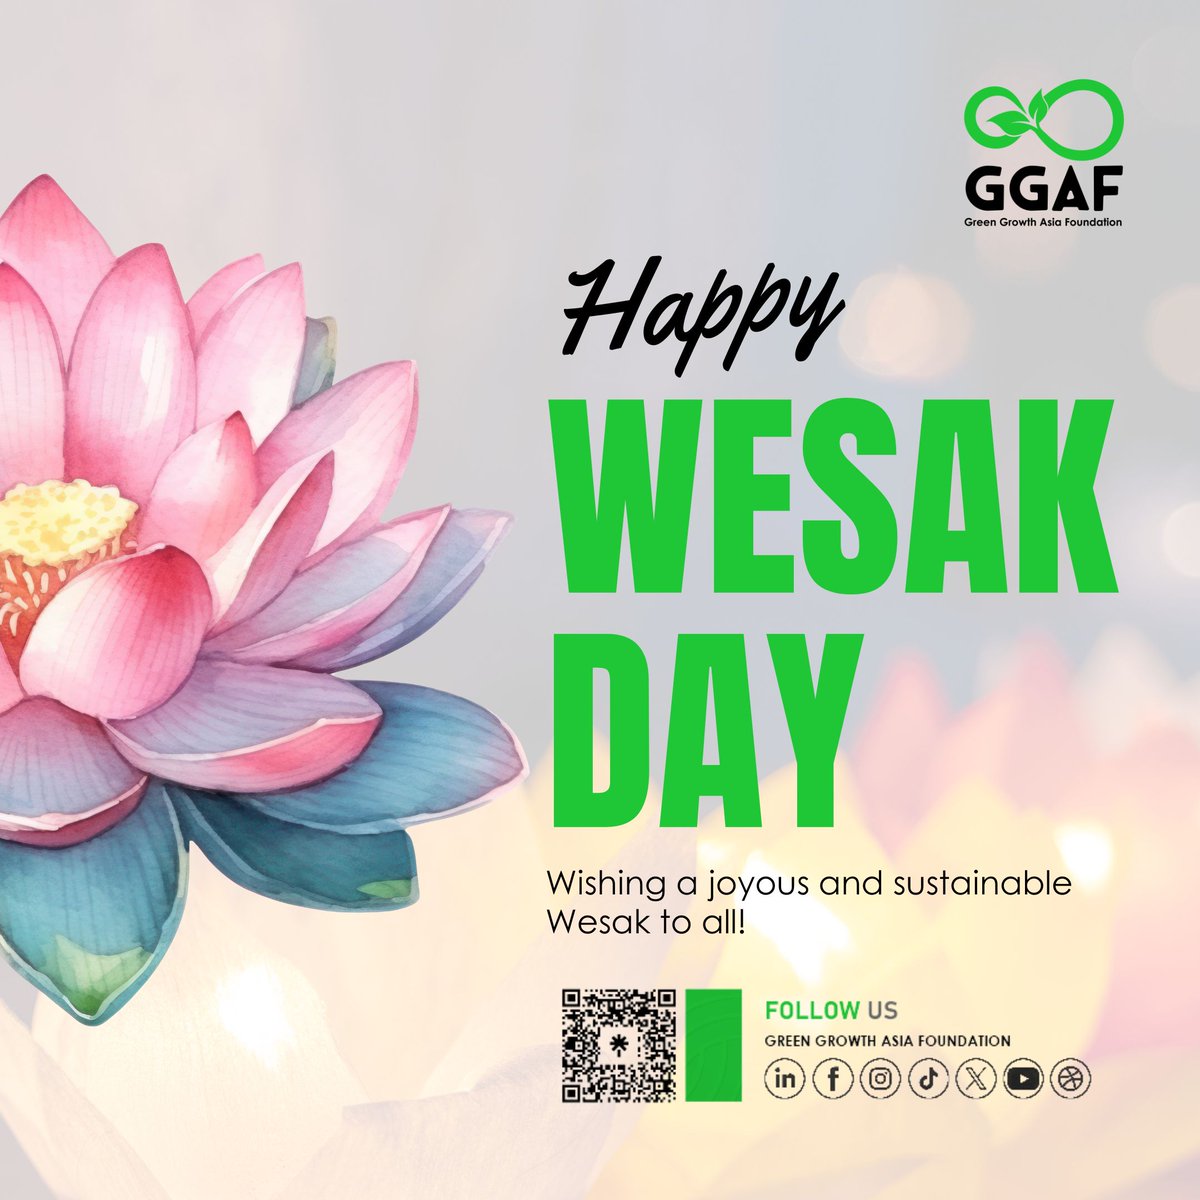 Happy Wesak Day! 🌸

Wishing a blessed day full of joy and enlightenment to everyone celebrating Wesak from all of us at GGAF! 🌱💚

#WesakDay #HappyWesak #GGAF #IndividualClimateAction #PeaceAndHarmony #SustainableFuture